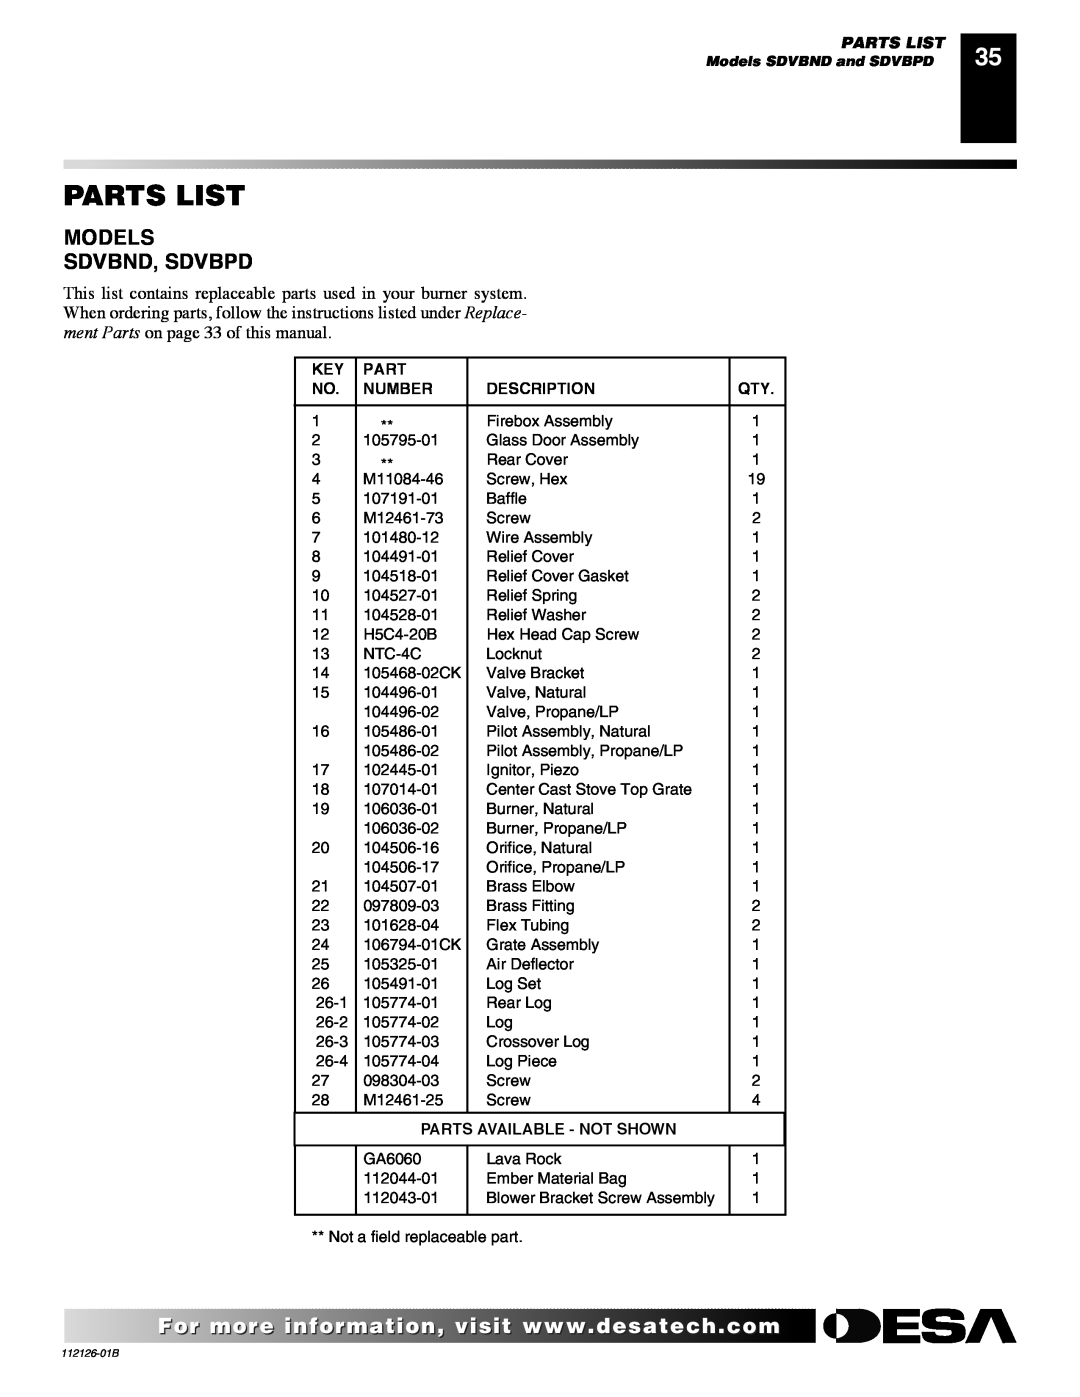 Desa SDVBPD, SDVBND installation manual Parts List, Models Sdvbnd, Sdvbpd, Number, Description, Parts Available - Not Shown 